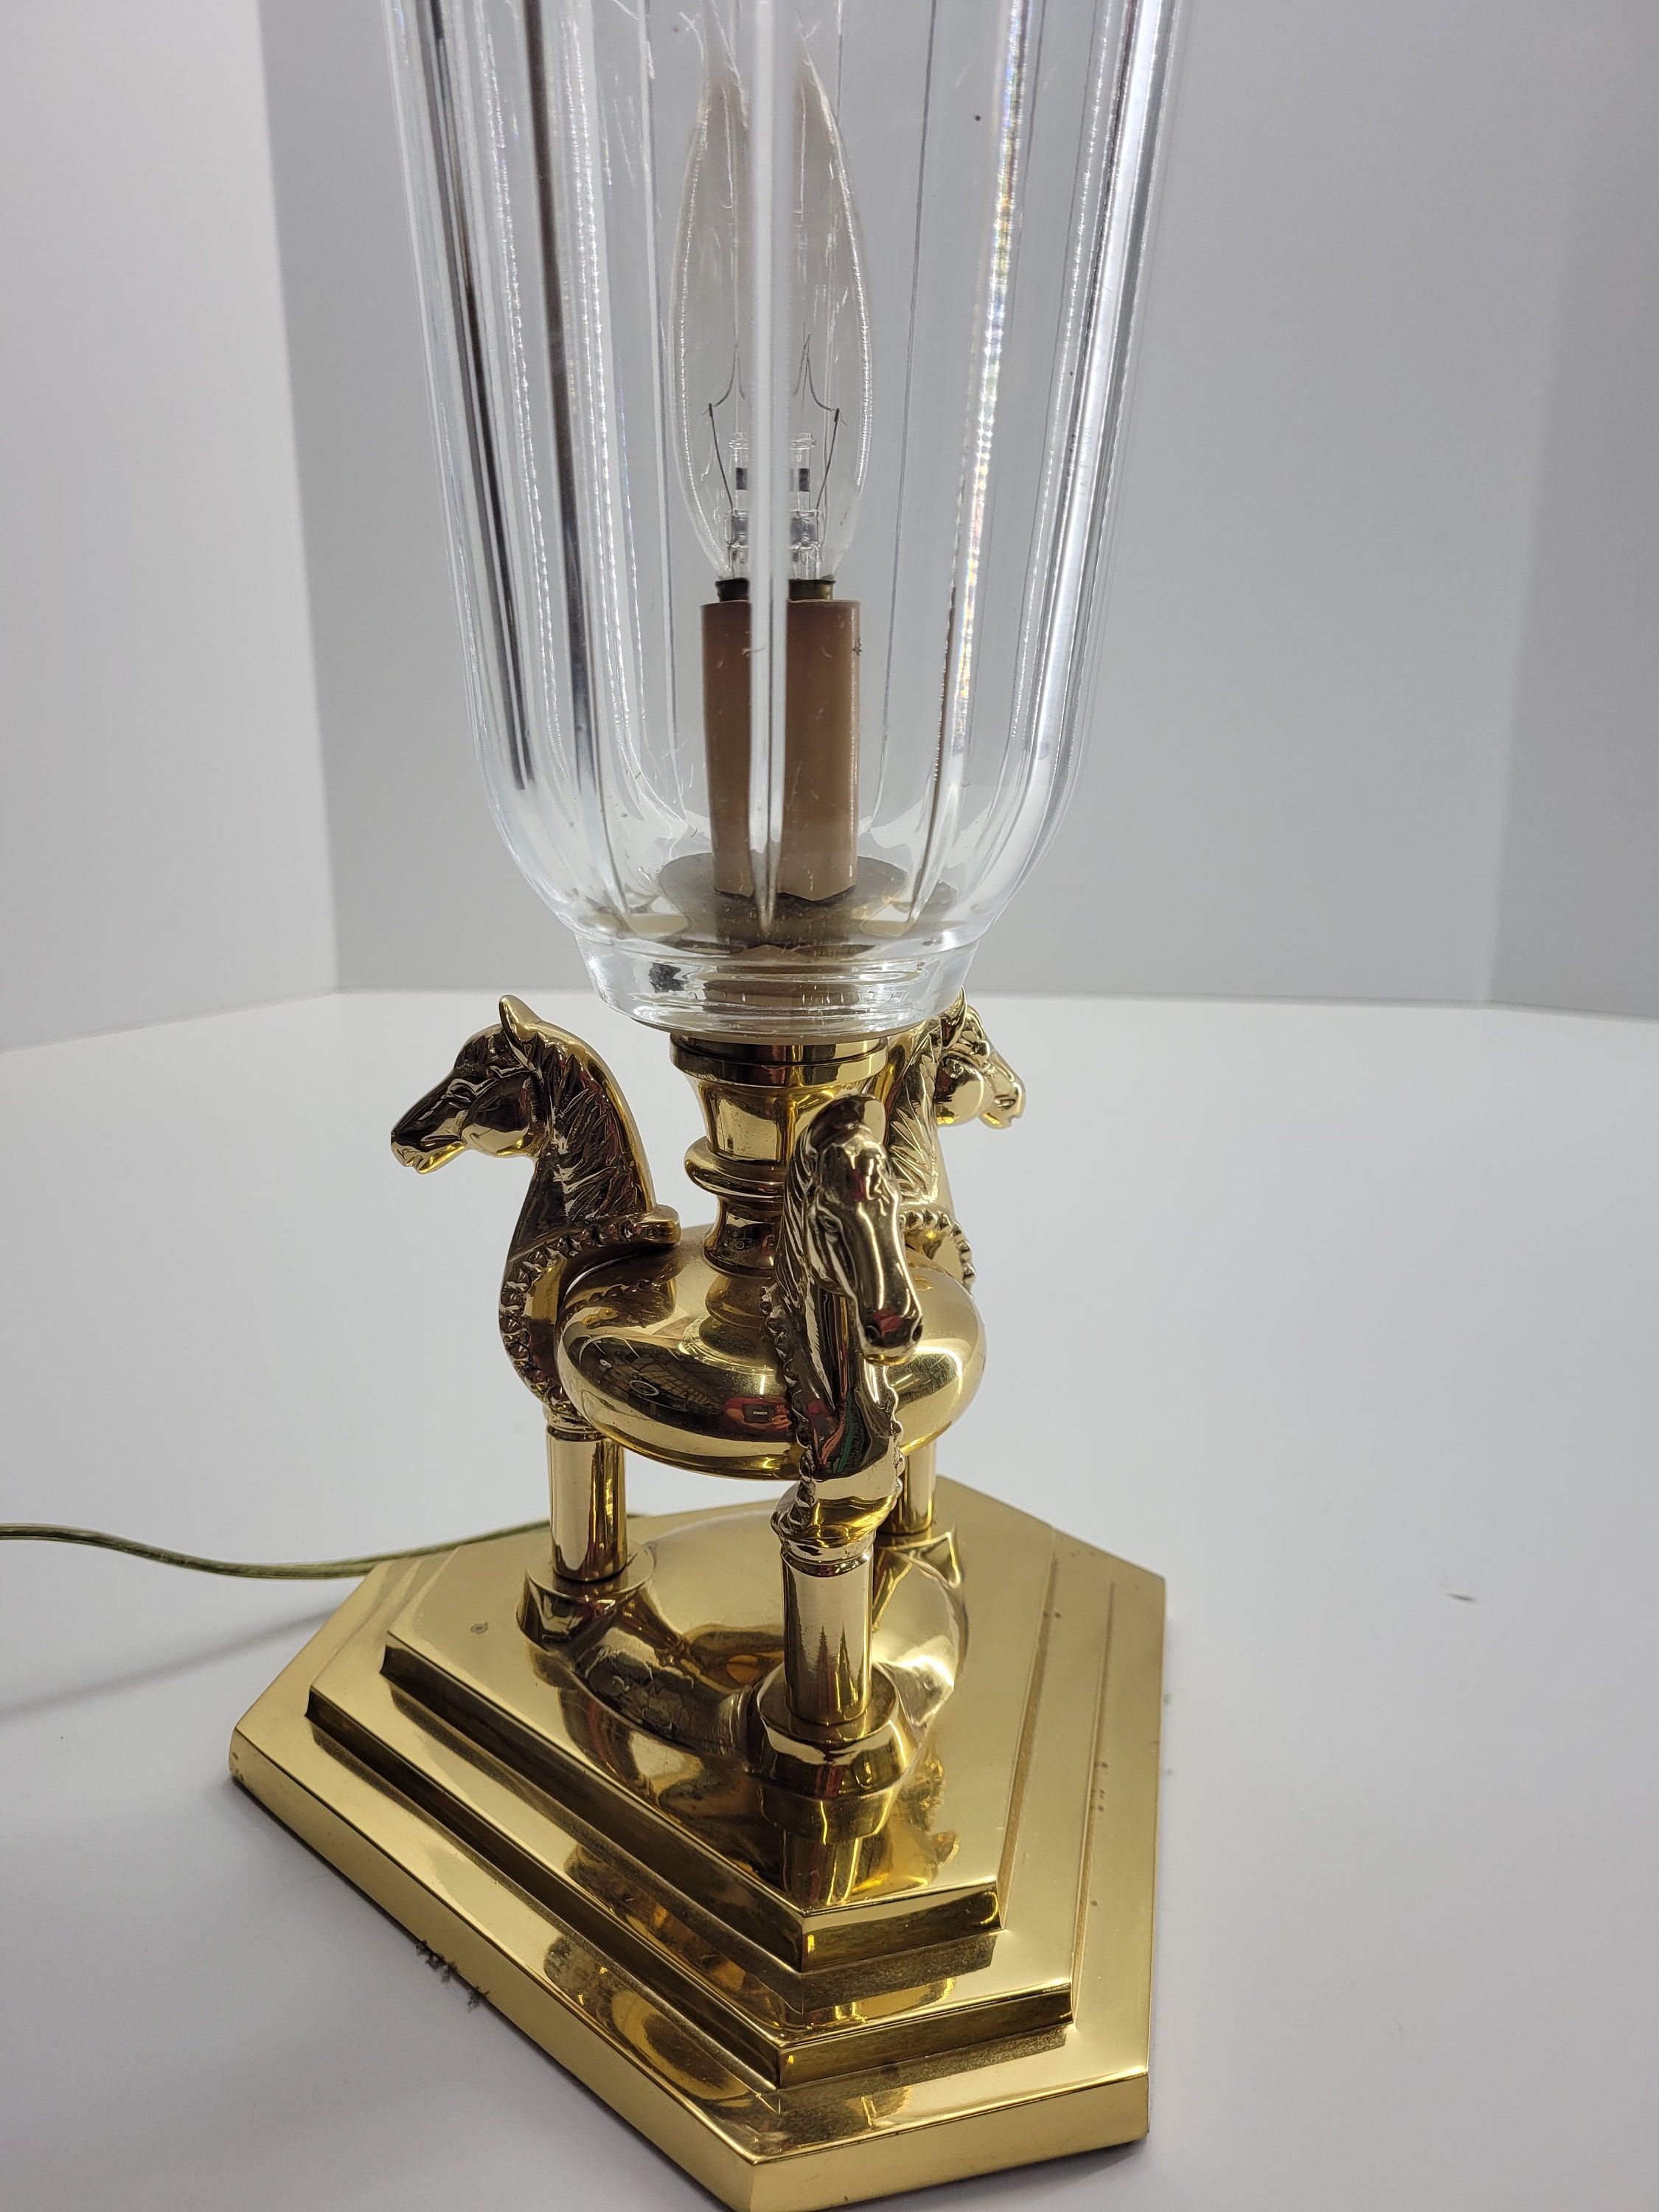 Original antique pressed brass furniture mount light lamp part fitting T19 